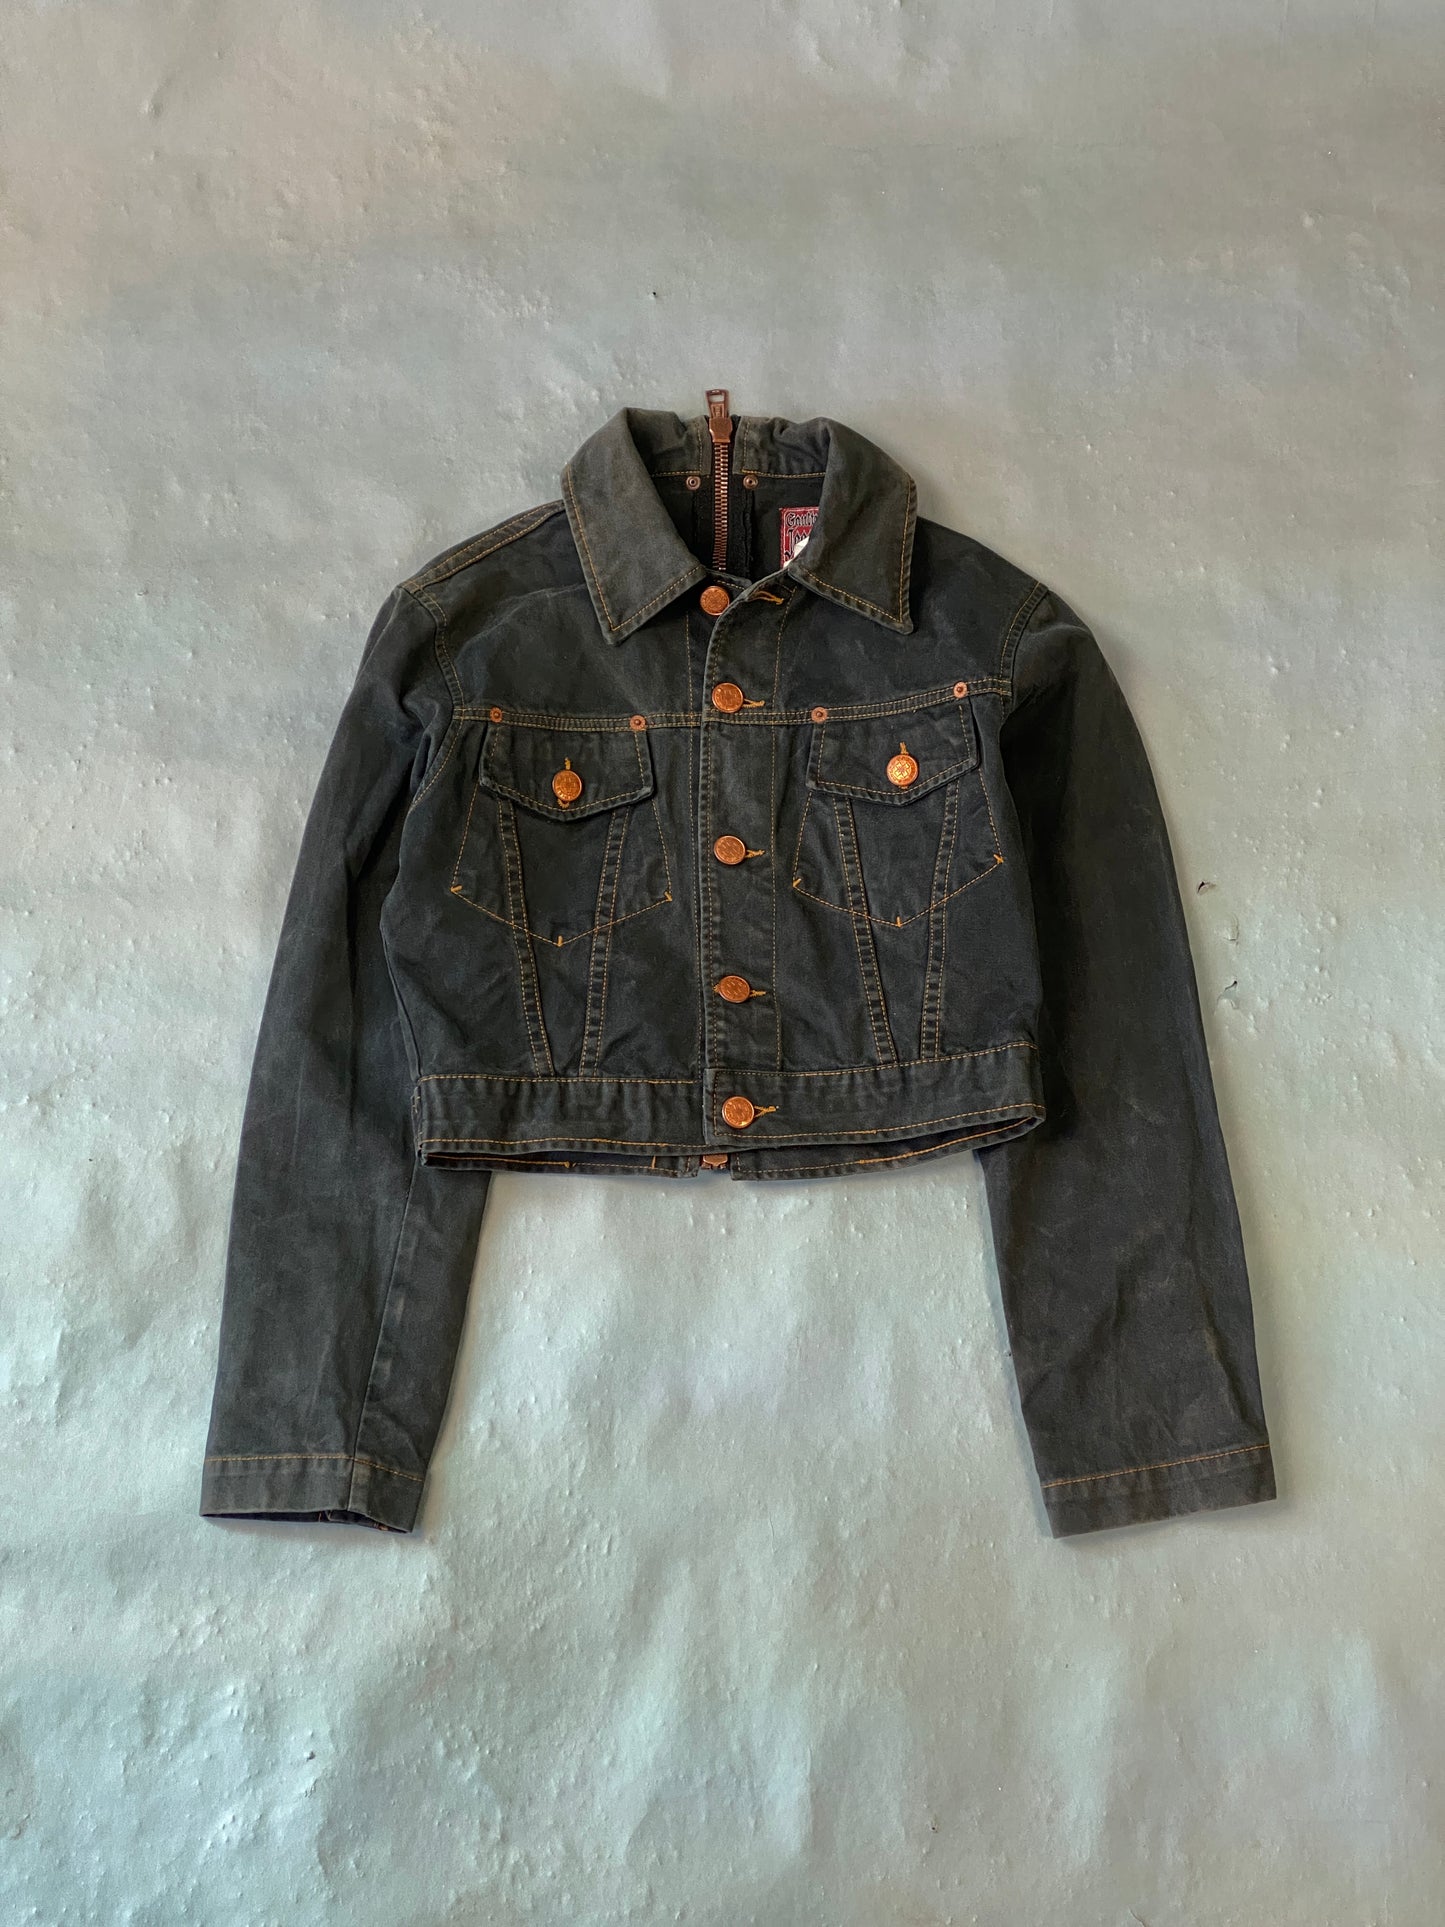 Jean Paul Gaultier FW98 Cropped Back Zip Vintage Denim Jacket